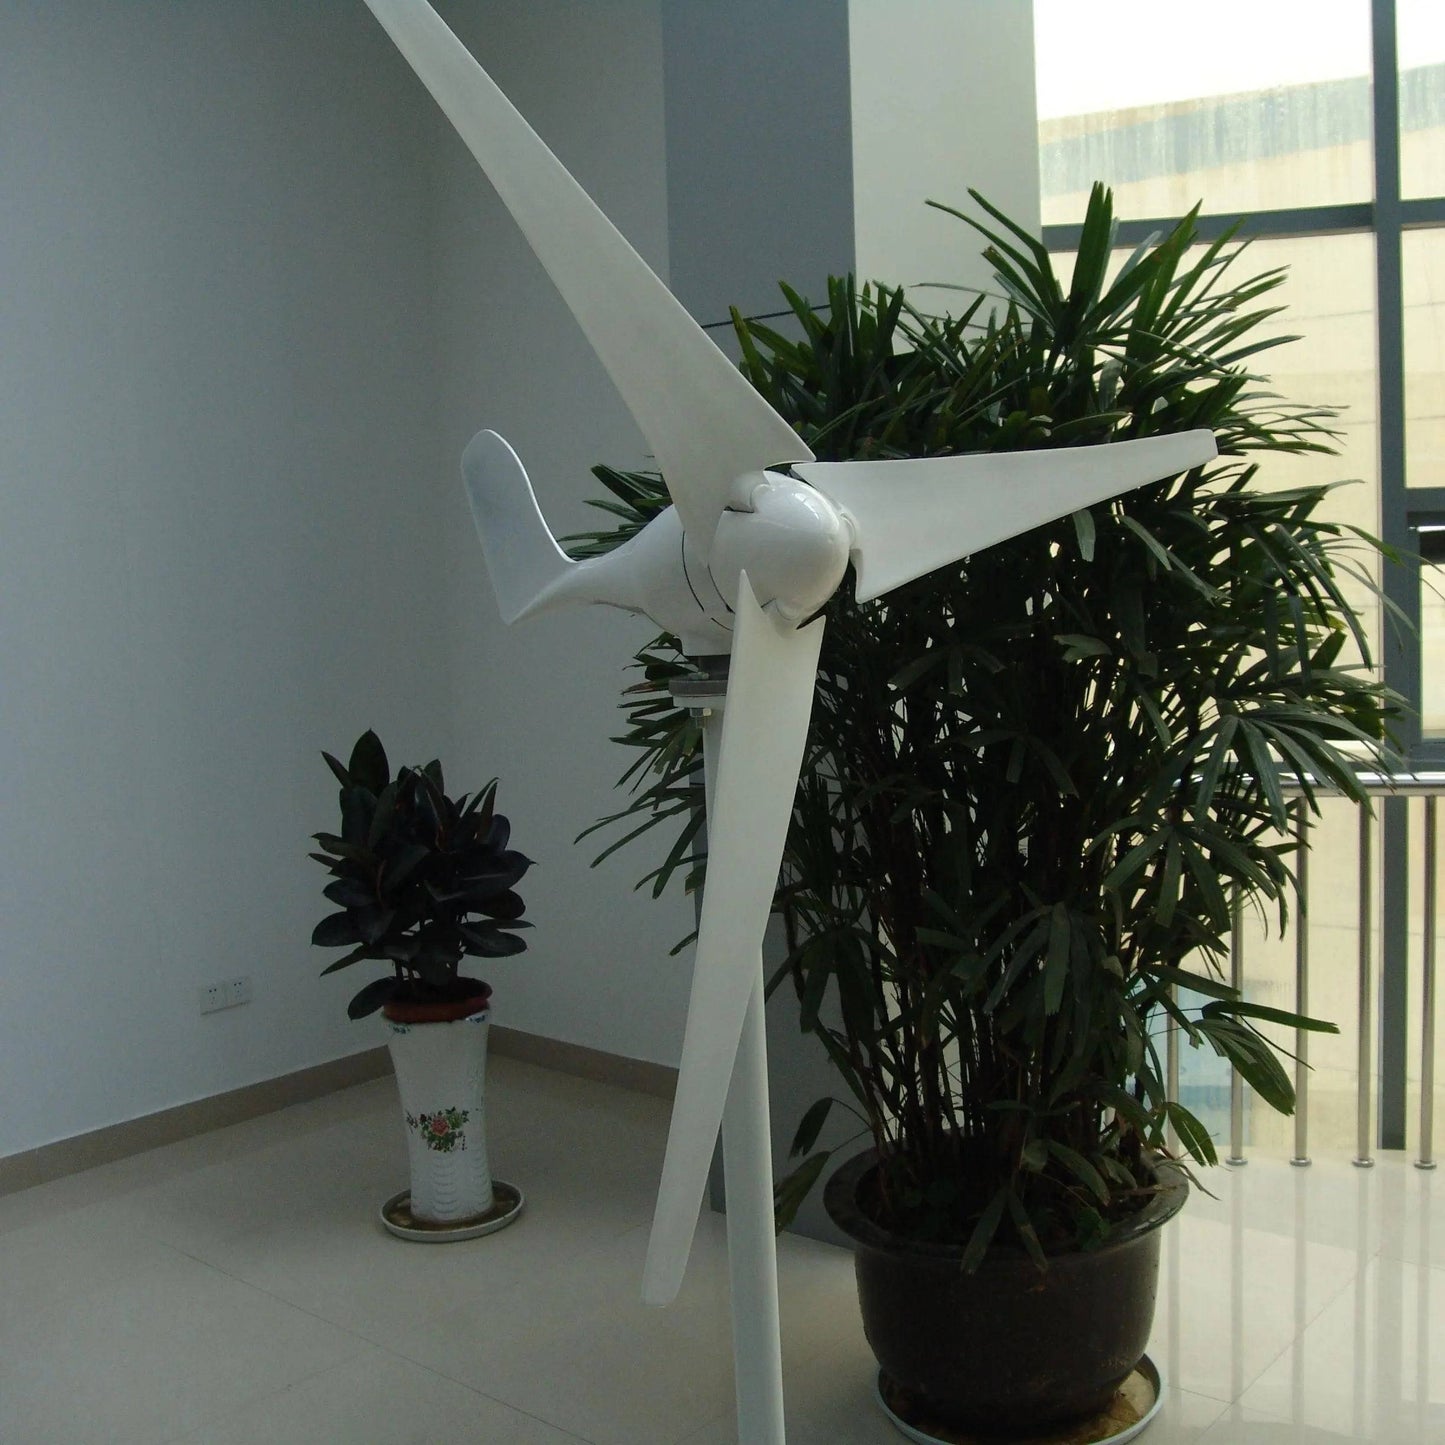 Wind Turbine Generator 300/400W small wind 12/14V waterproof controller - 54 Energy - Renewable Energy Store